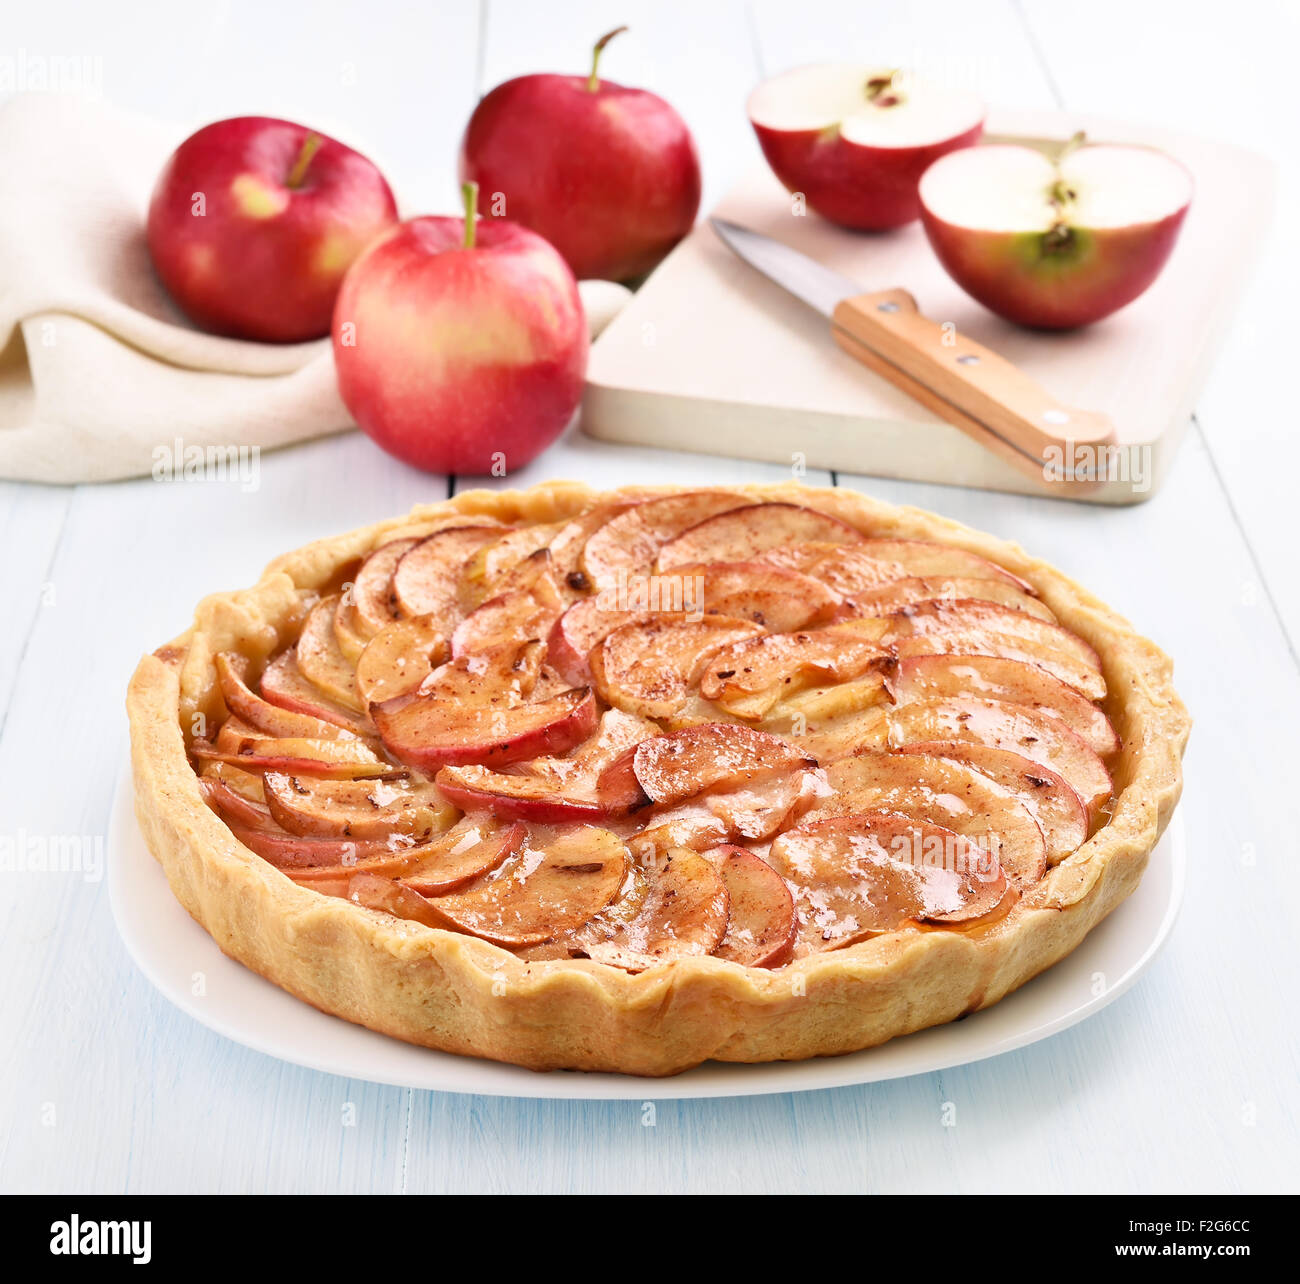 Apple pie on wooden table Stock Photo